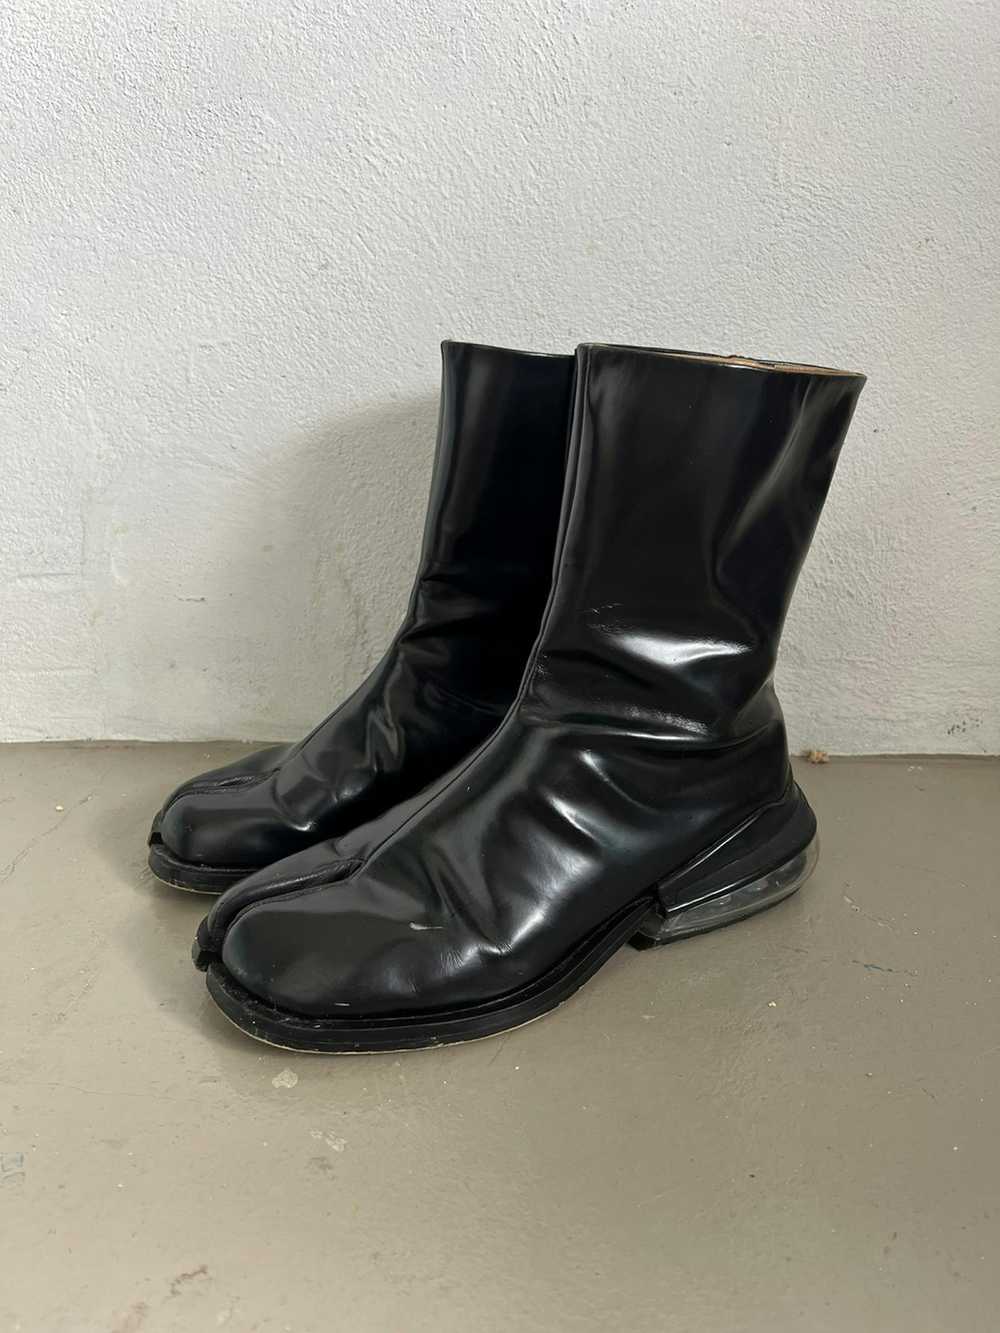 Rare Tabi Airbag Heels Boots - image 2